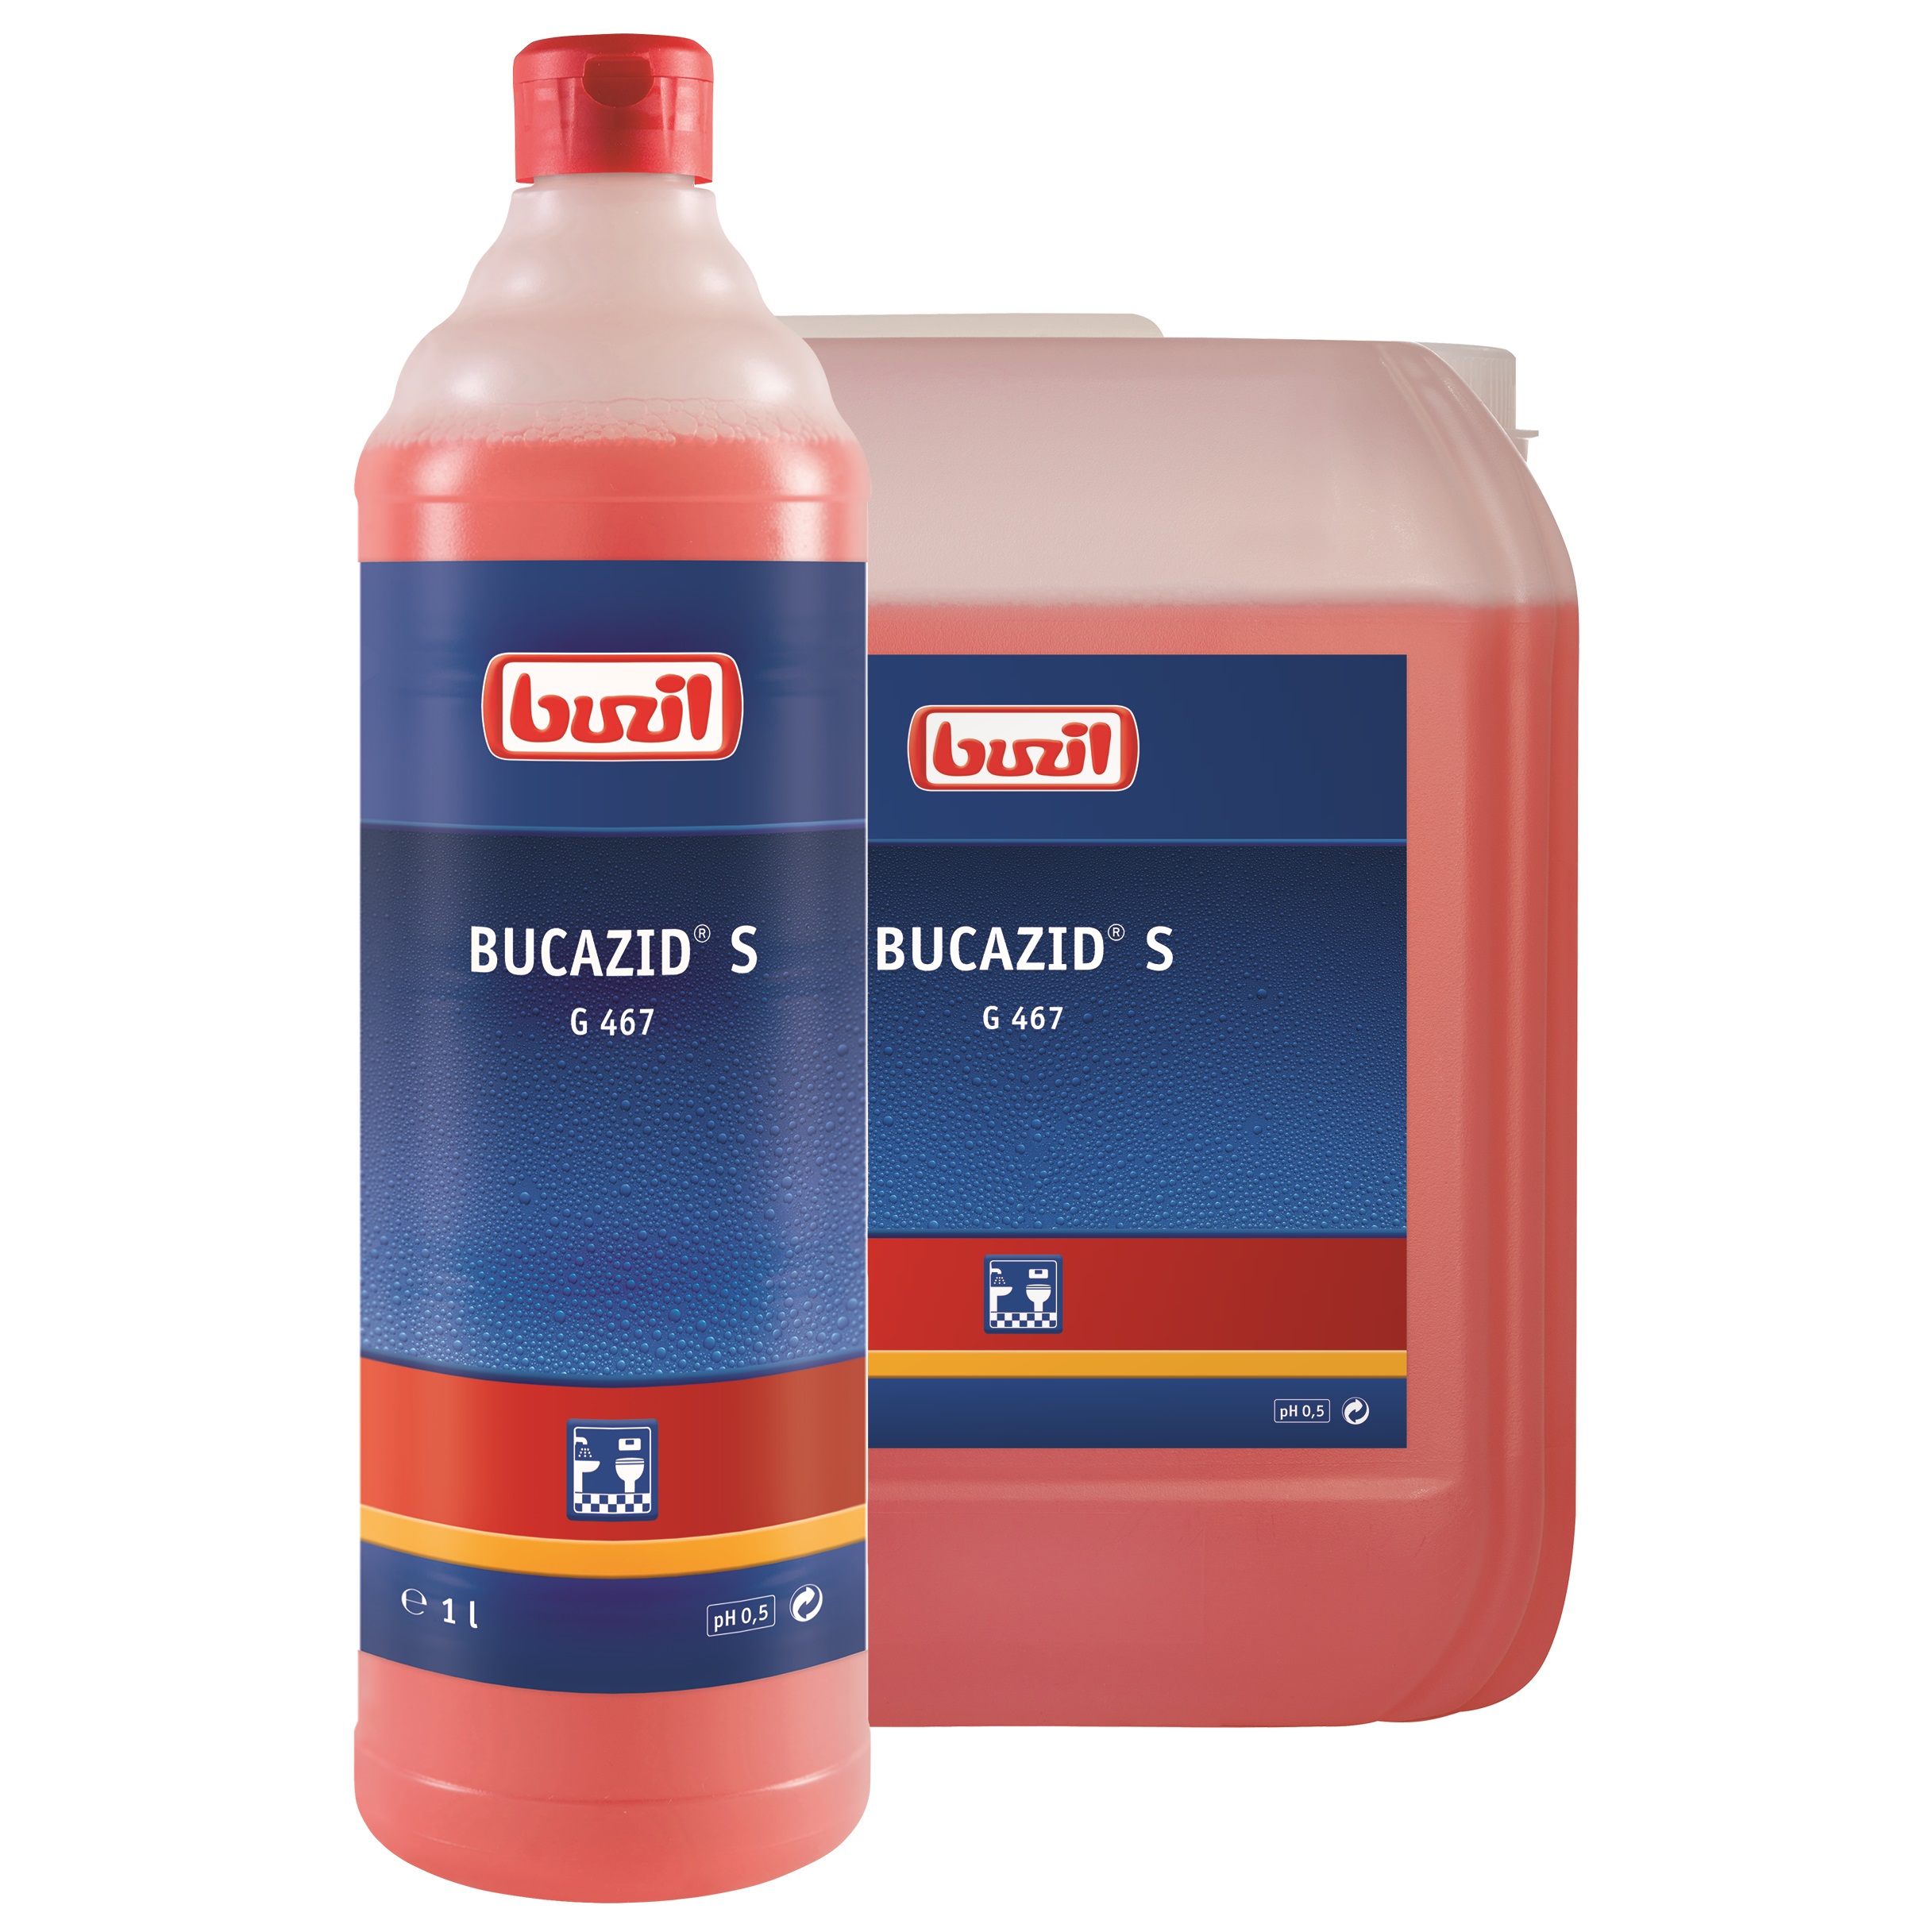 Buzil Bucazid S G 467, Sanitärunterhaltsreiniger 1,0 L Flasche